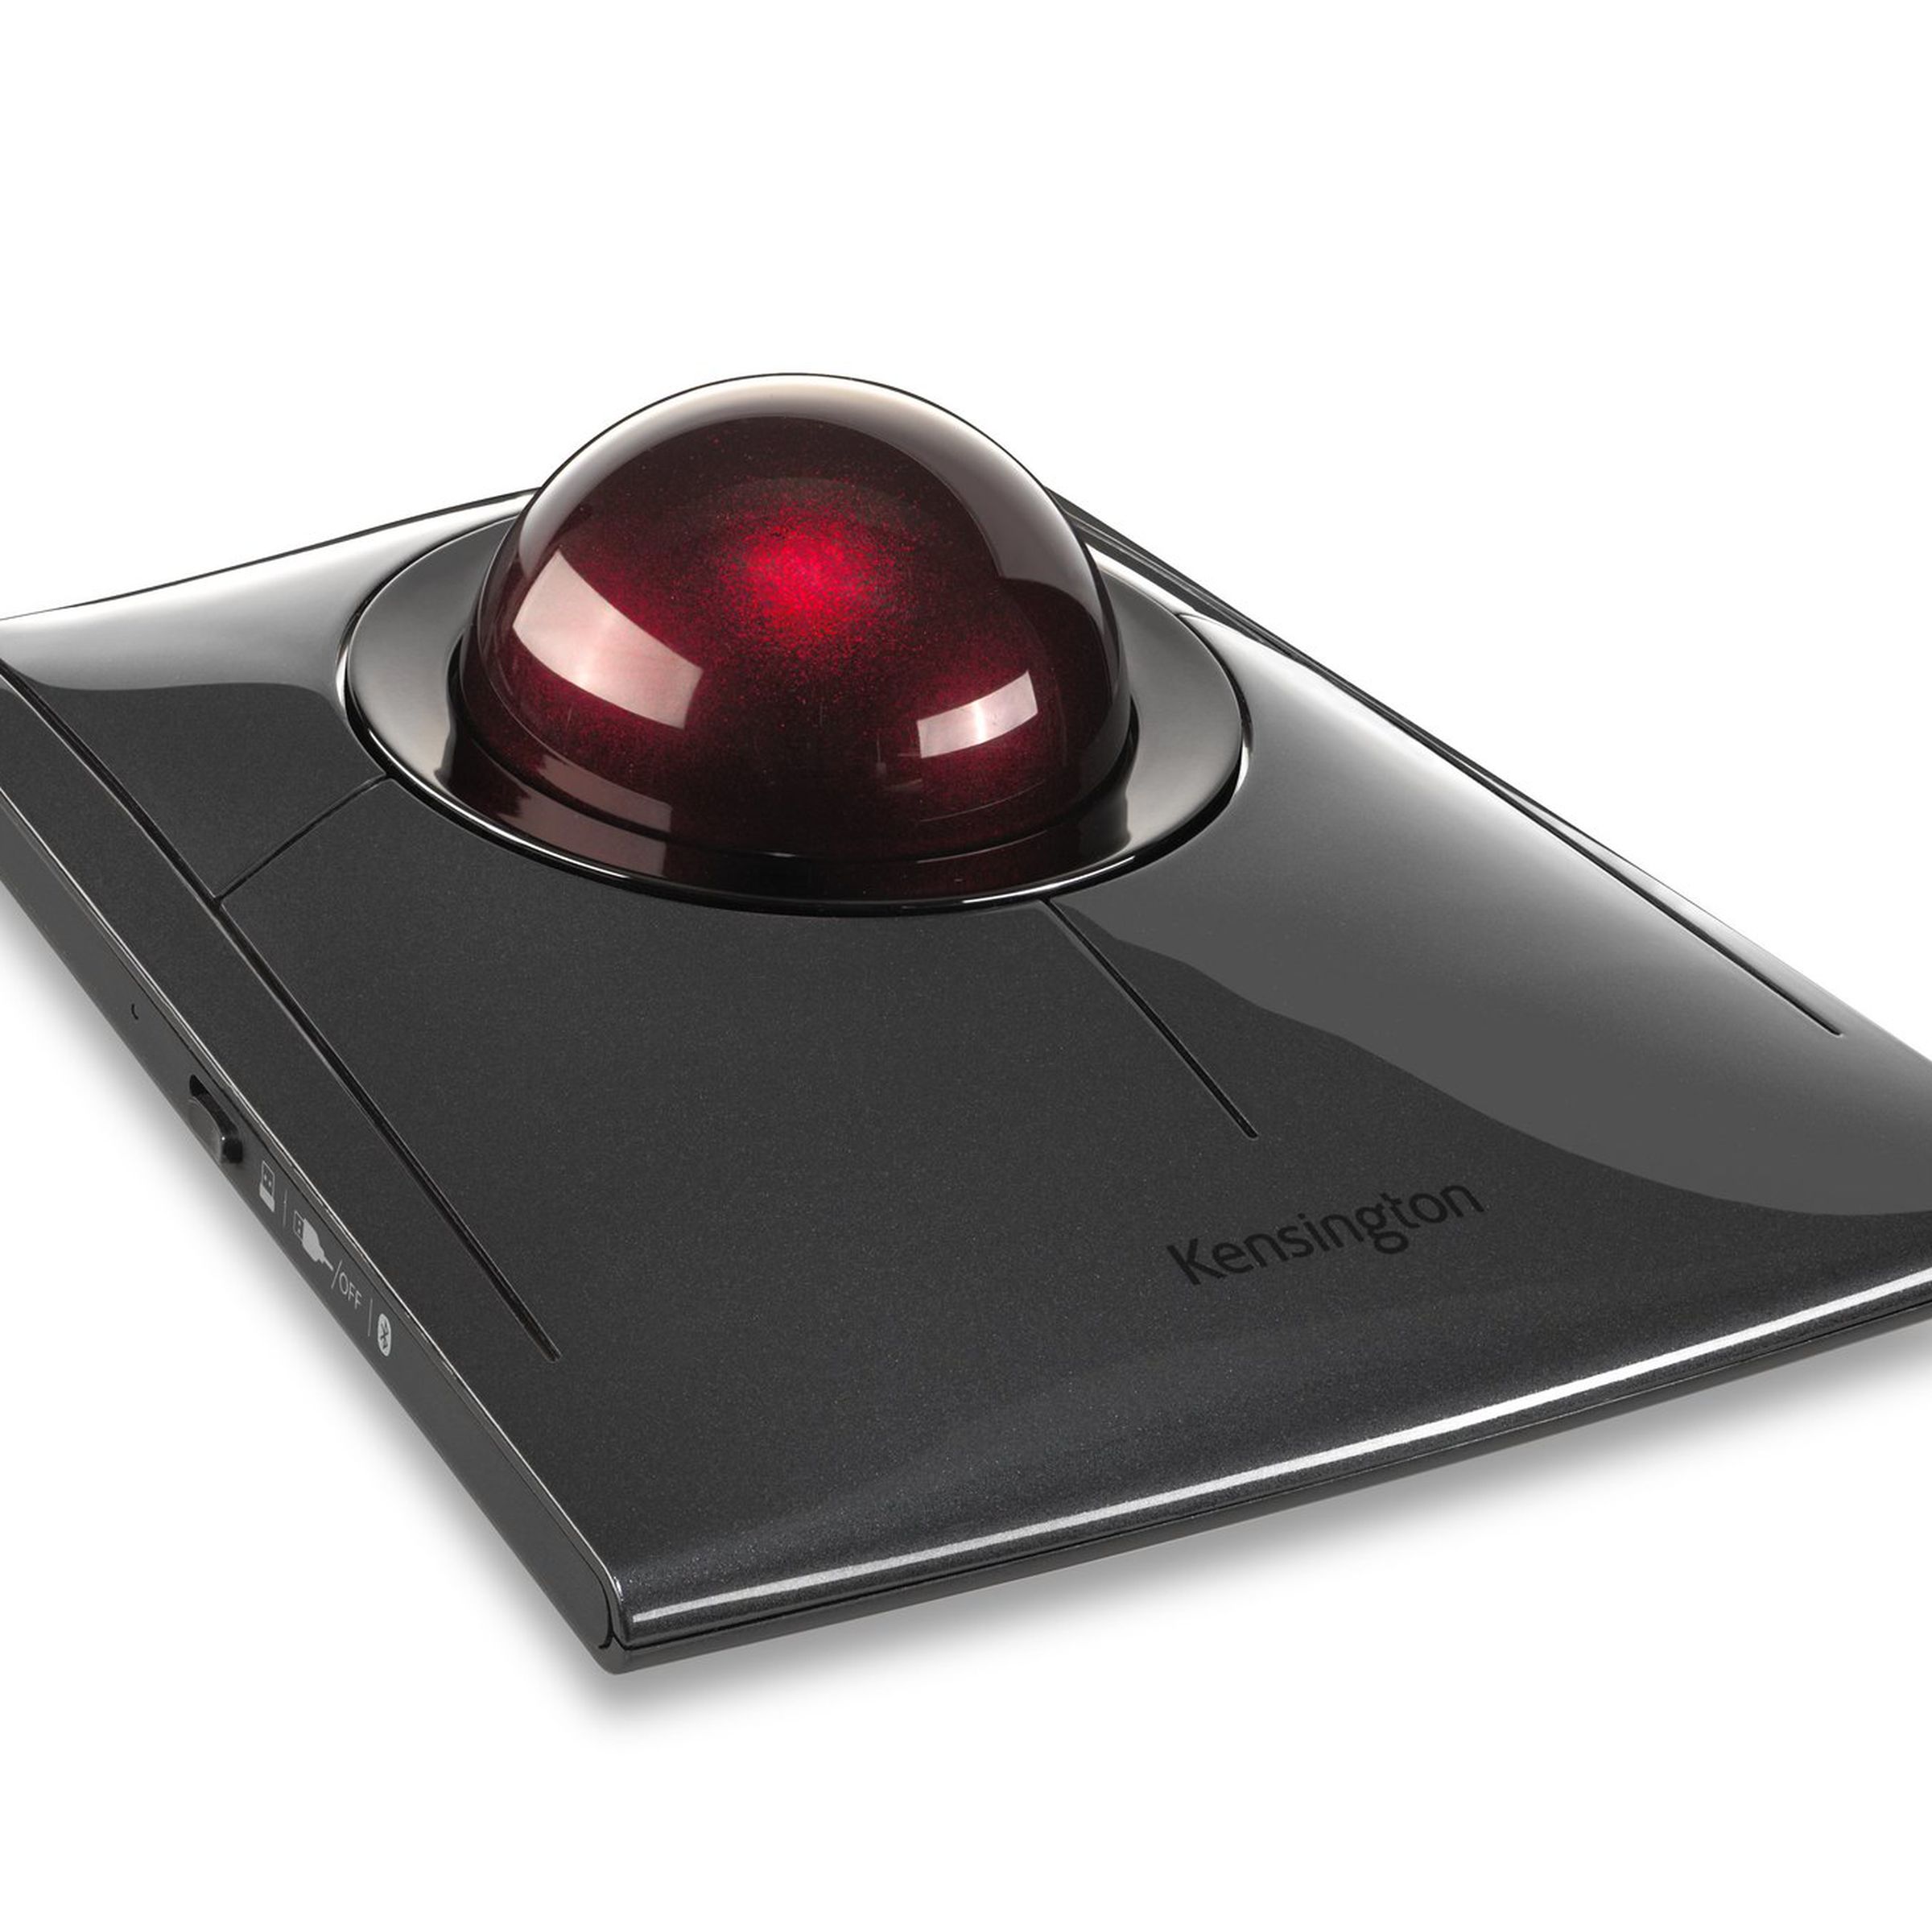 The new SlimBlade Pro trackball mouse.